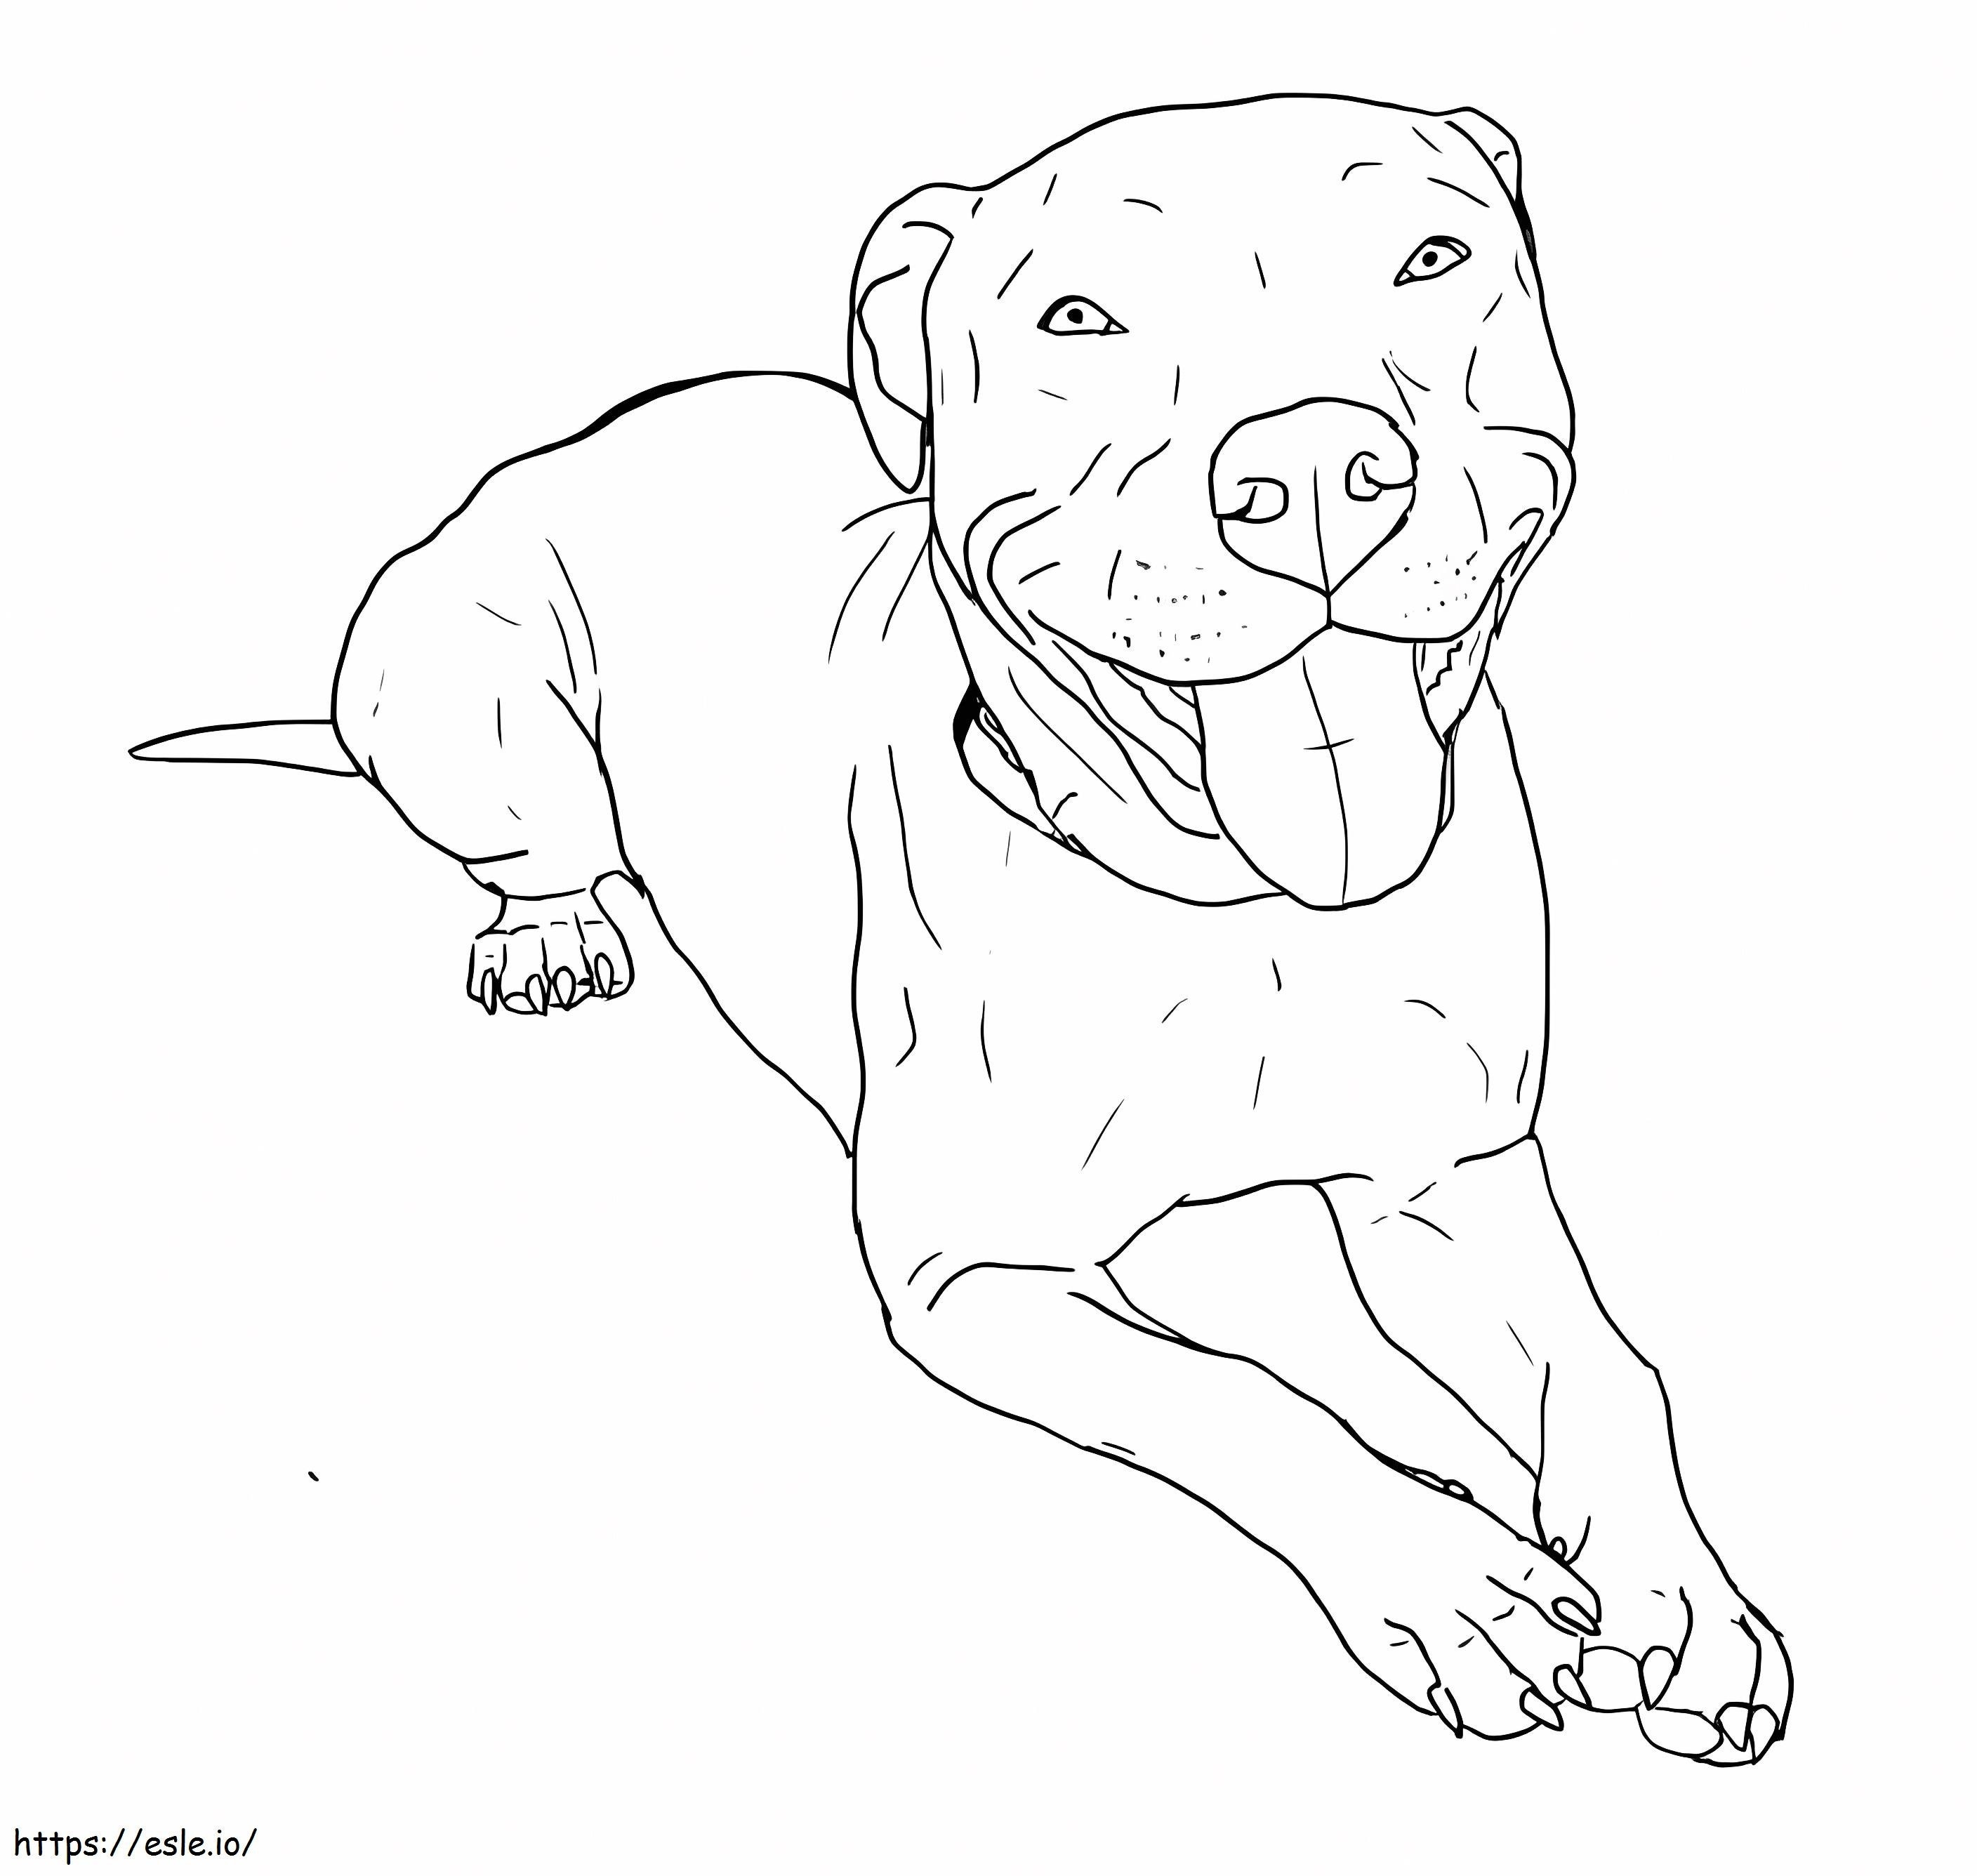 Cute Pitbull coloring page